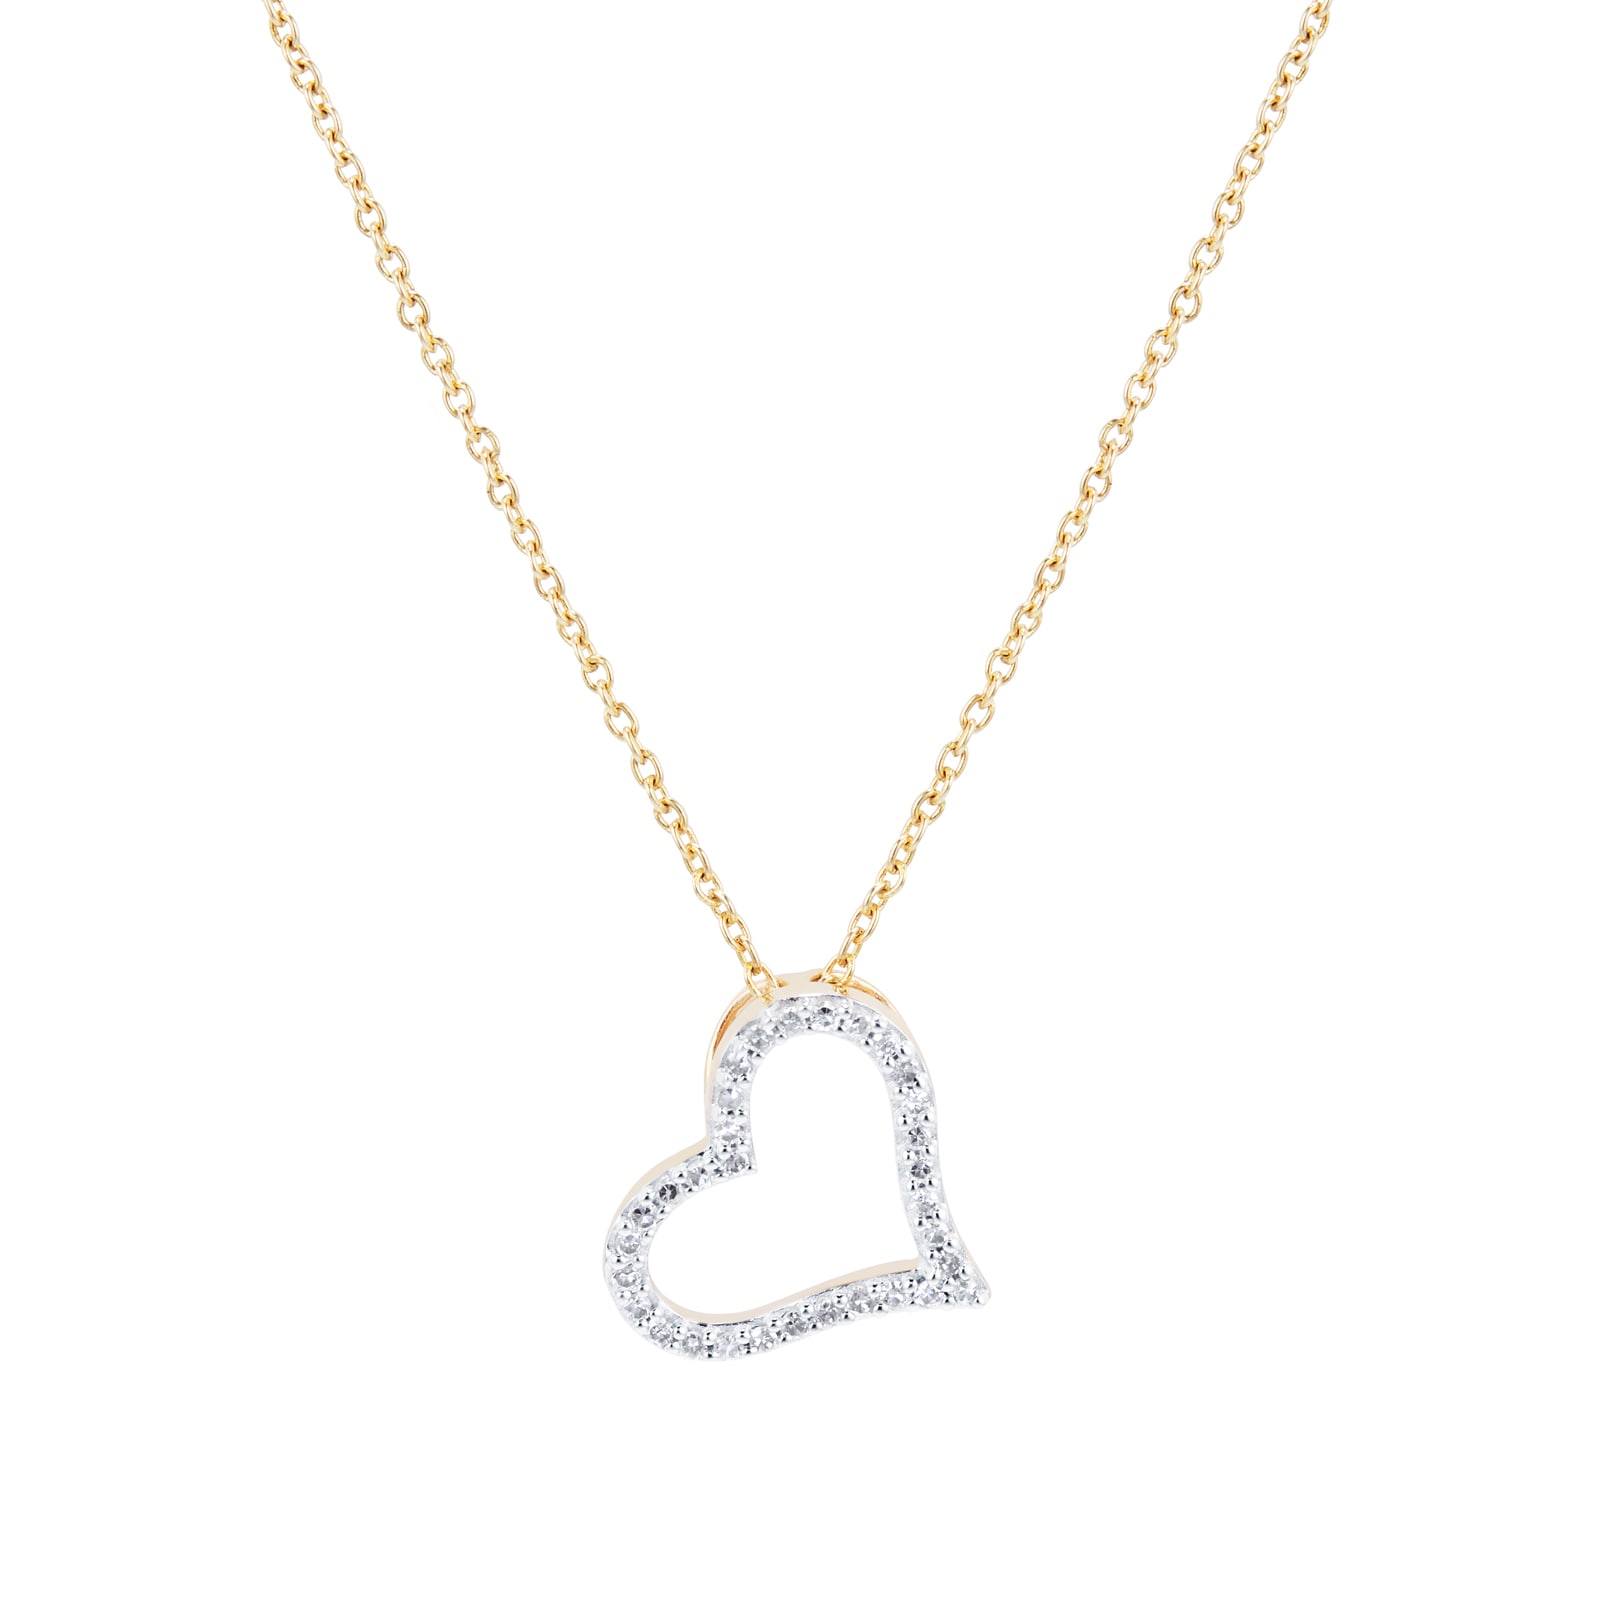 18ct Gold Vermeil on Silver Designer Heart Necklace, £62 at Warren James